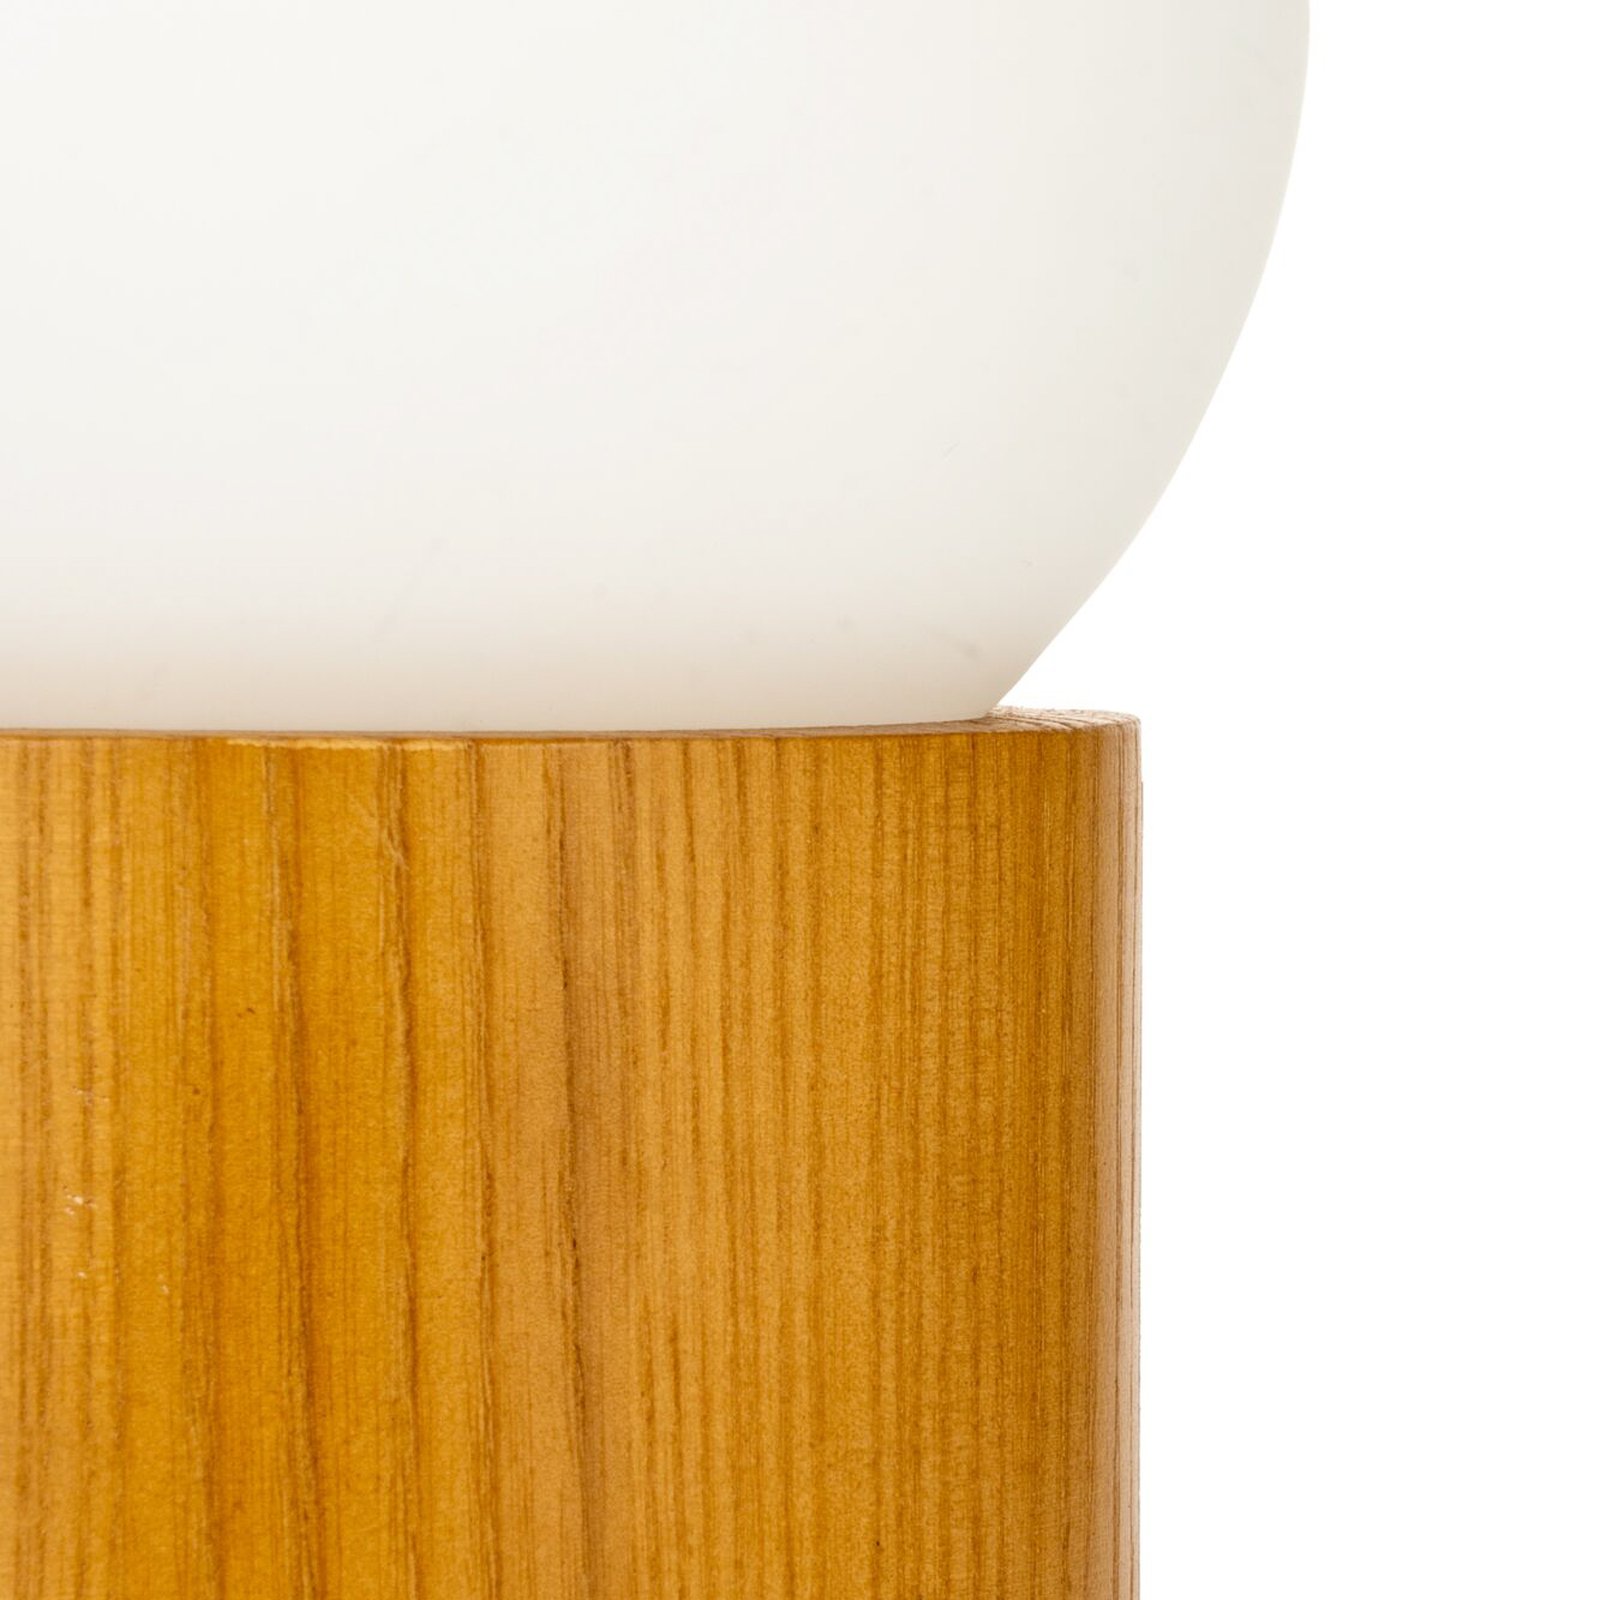 Pauleen Woody Shine stolová lampa, drevo, sklo